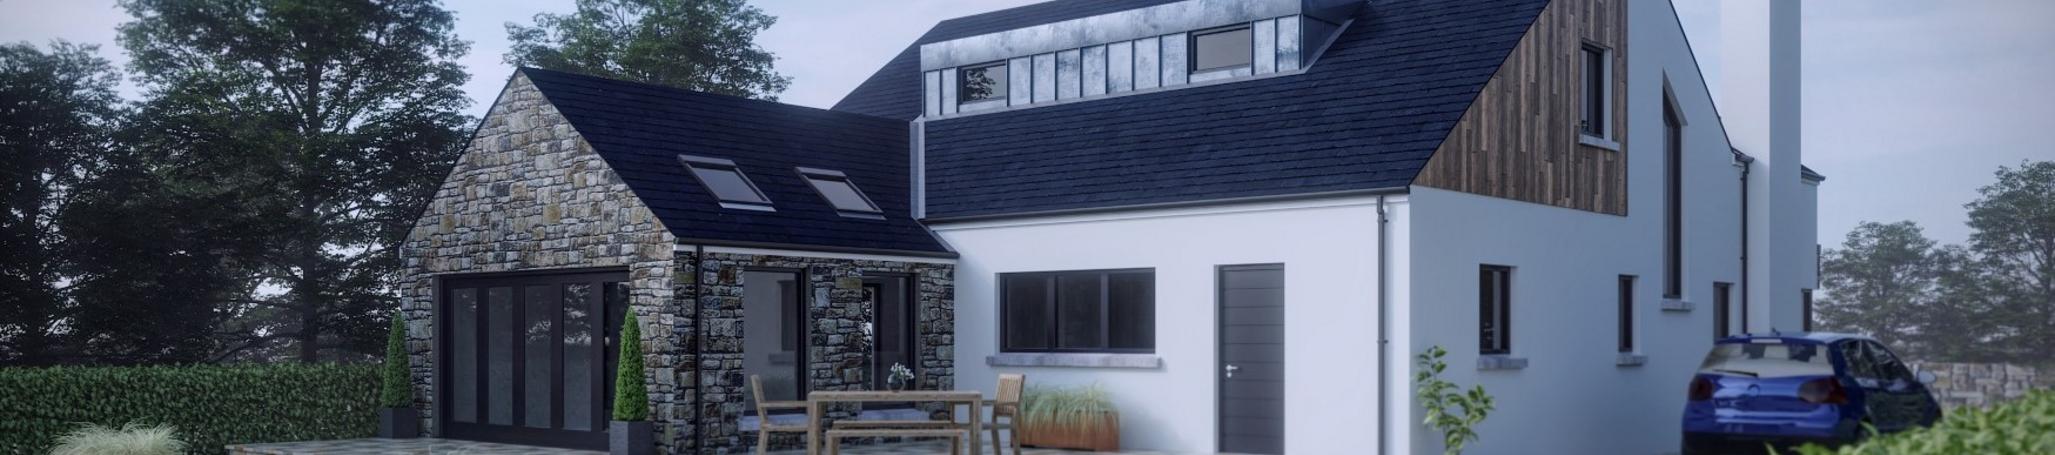 3D Visualisation of New Dwelling, Ballymena